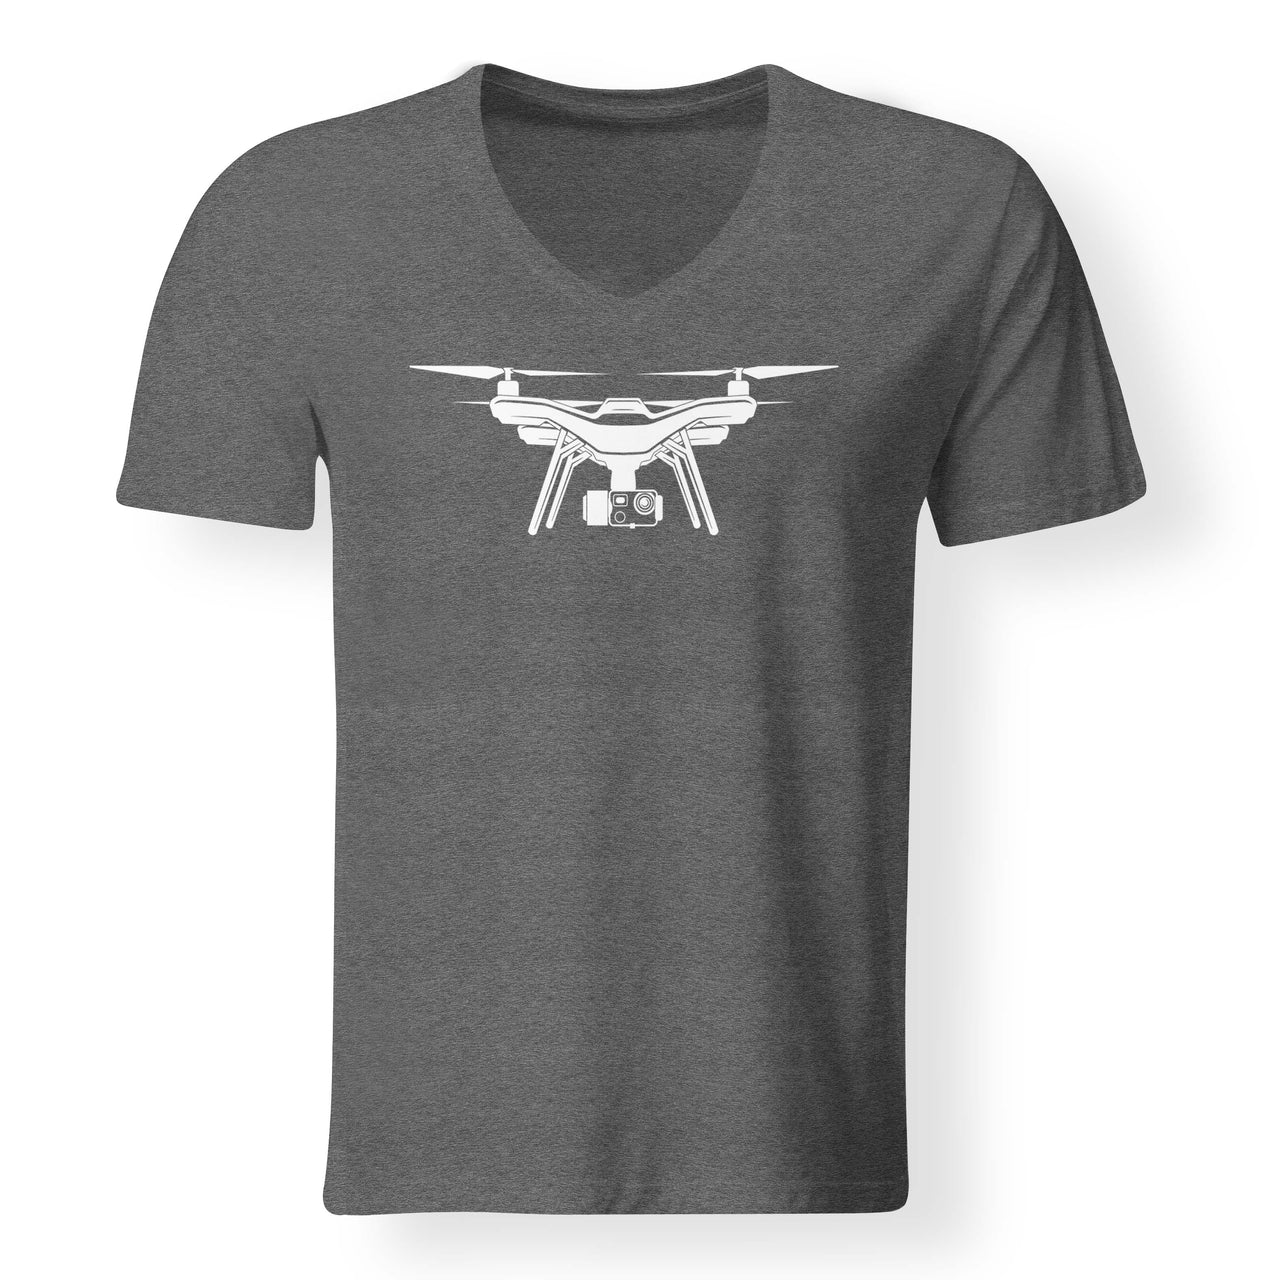 Drone Silhouette Designed V-Neck T-Shirts